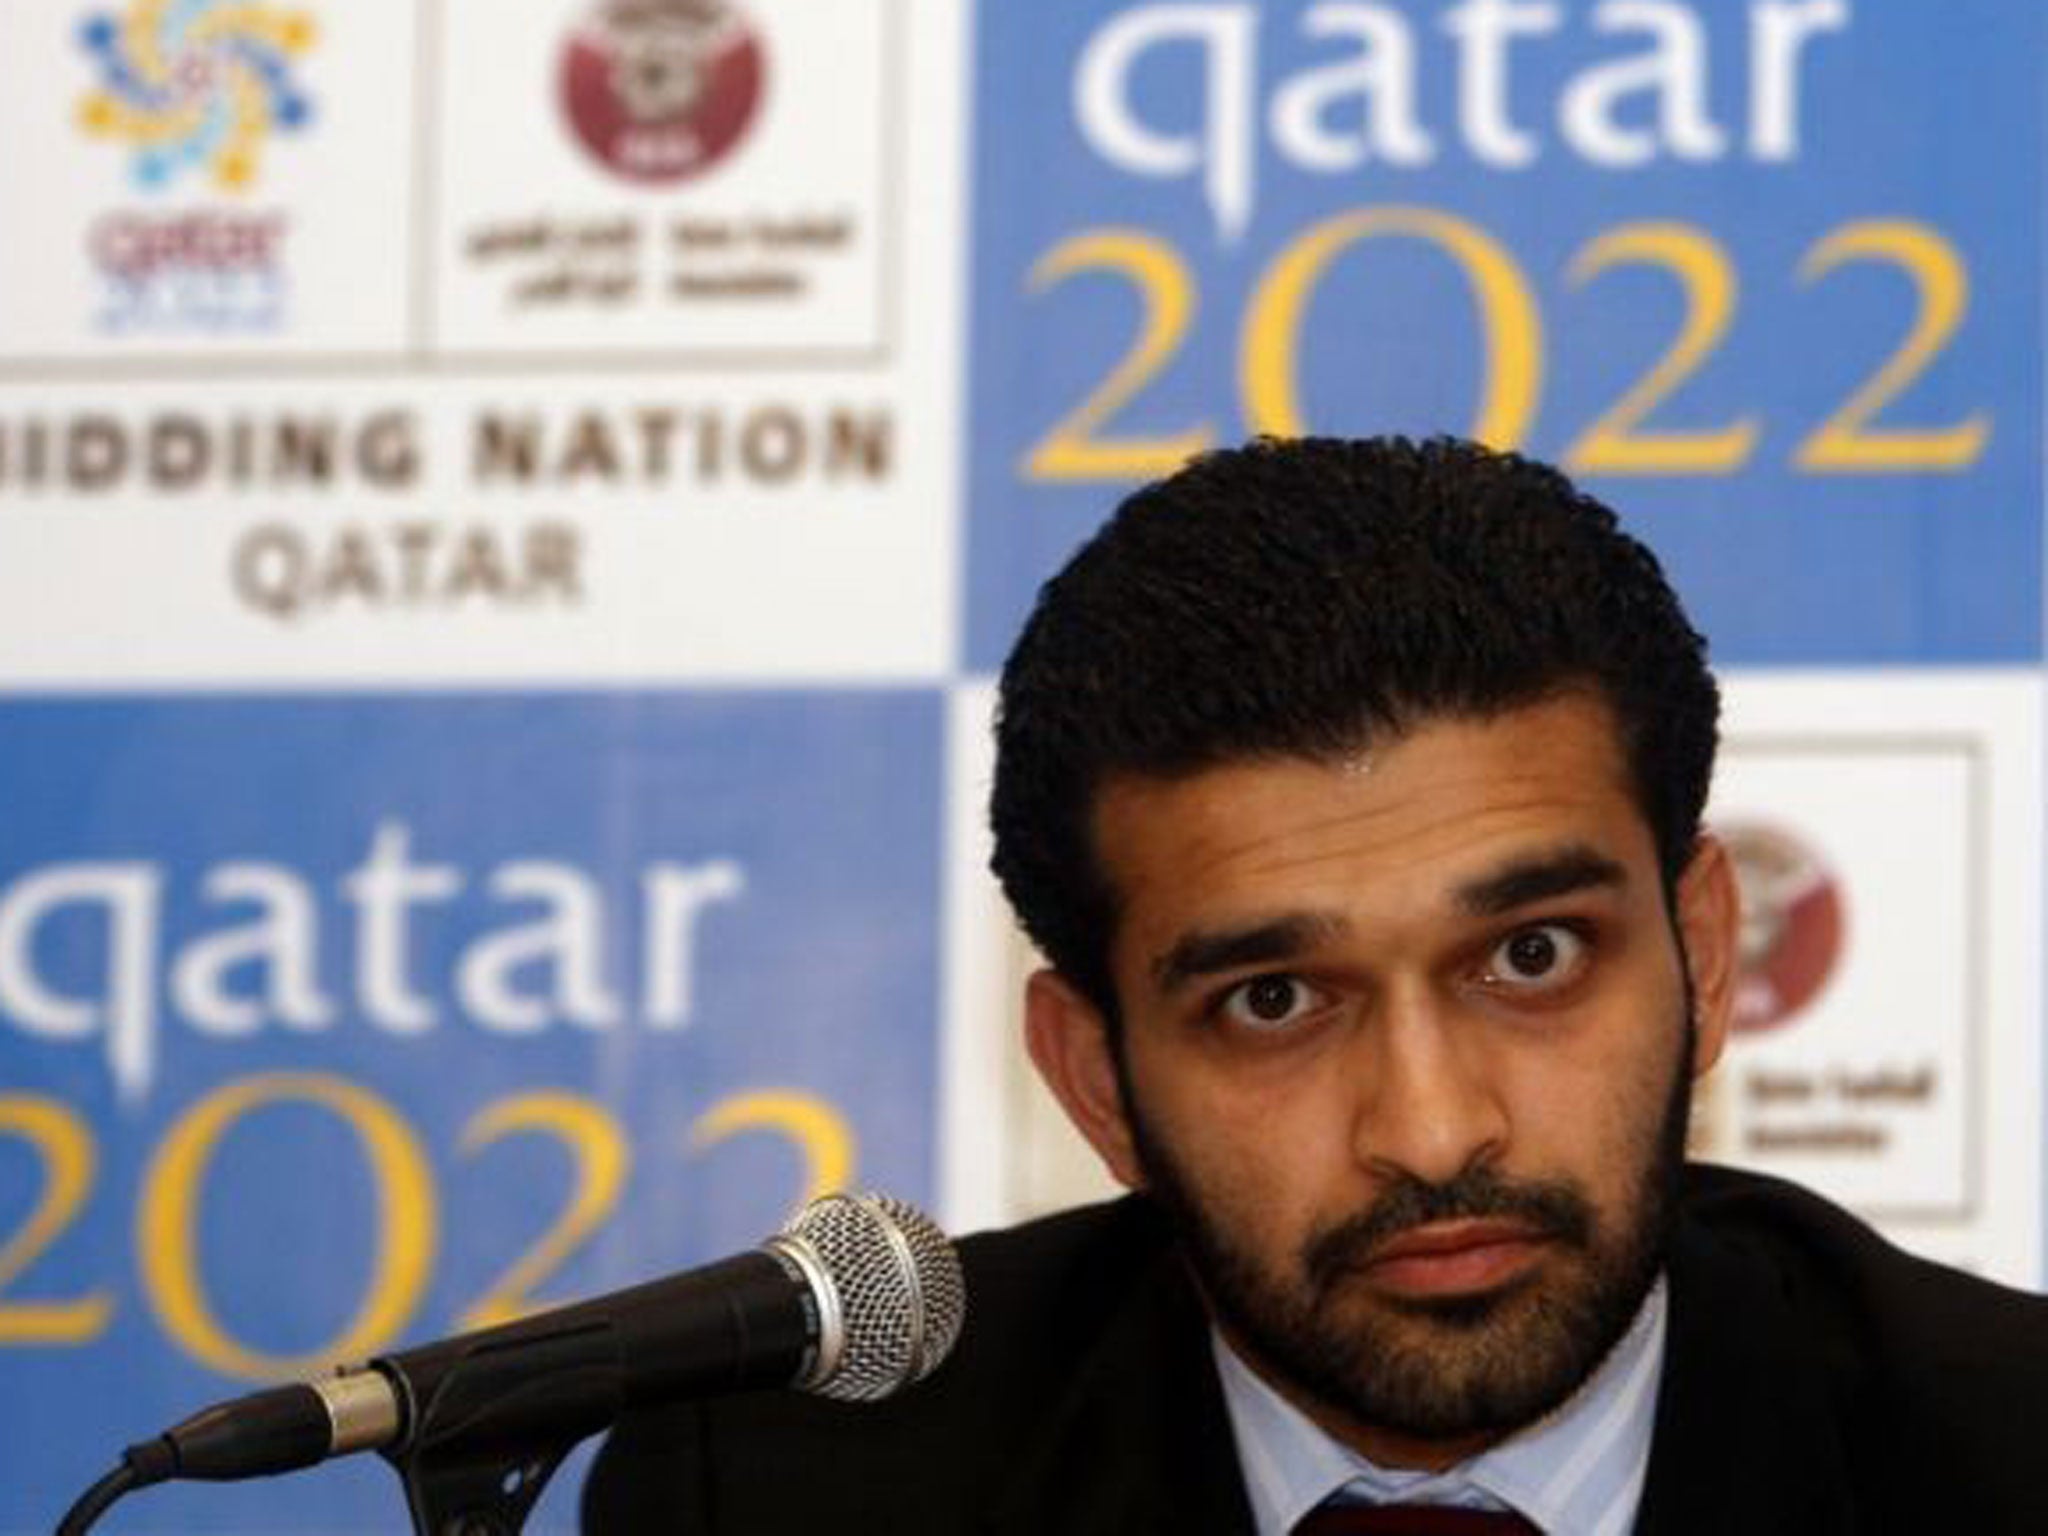 Right and wrong: Hassan Al-Thawadi defended Qatar’s human rights record